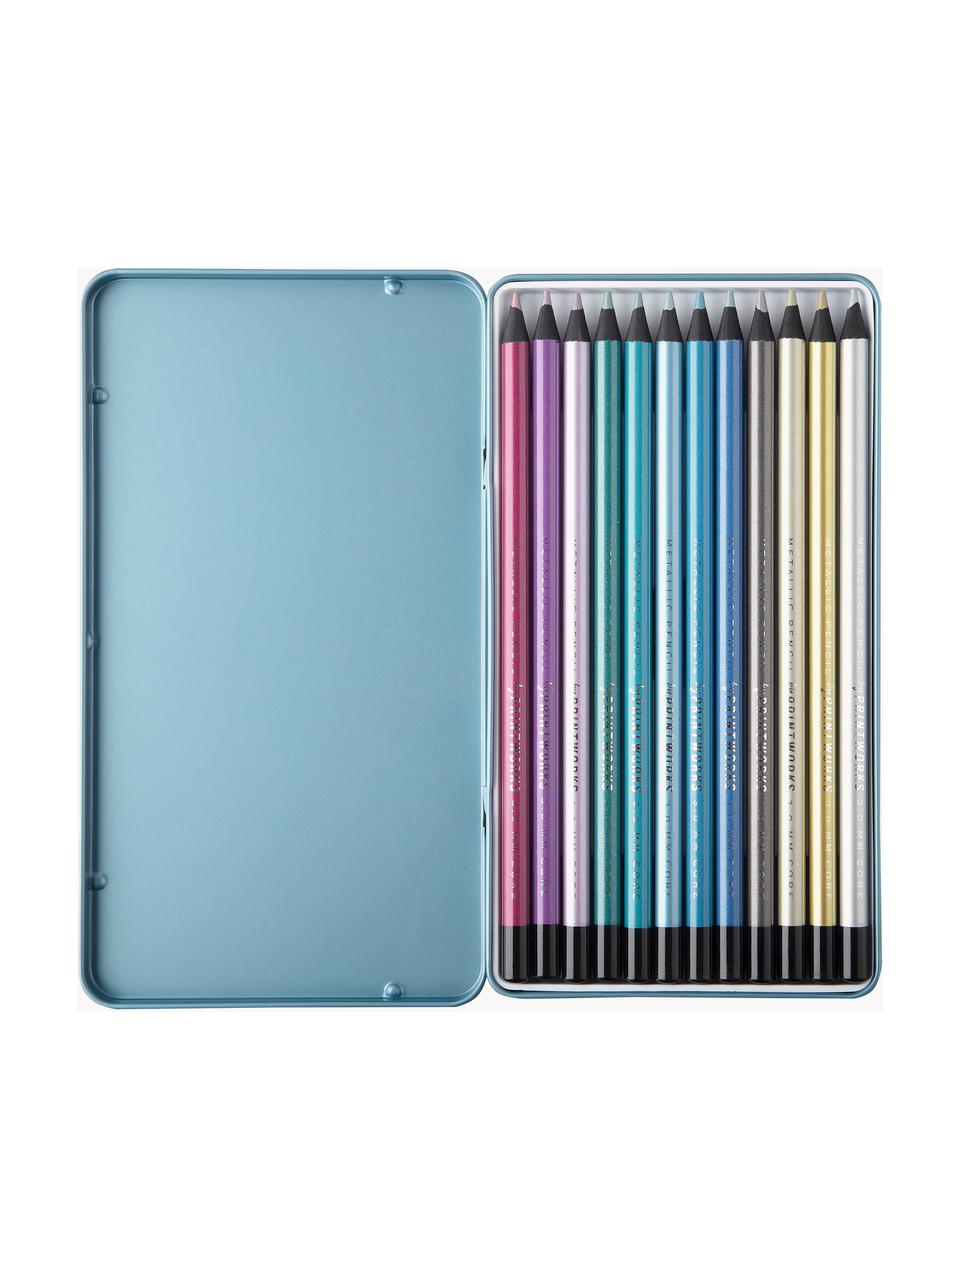 Sada barevných pastelek Metallic, 12 dílů, Modrá, Š 11 cm, V 19 cm